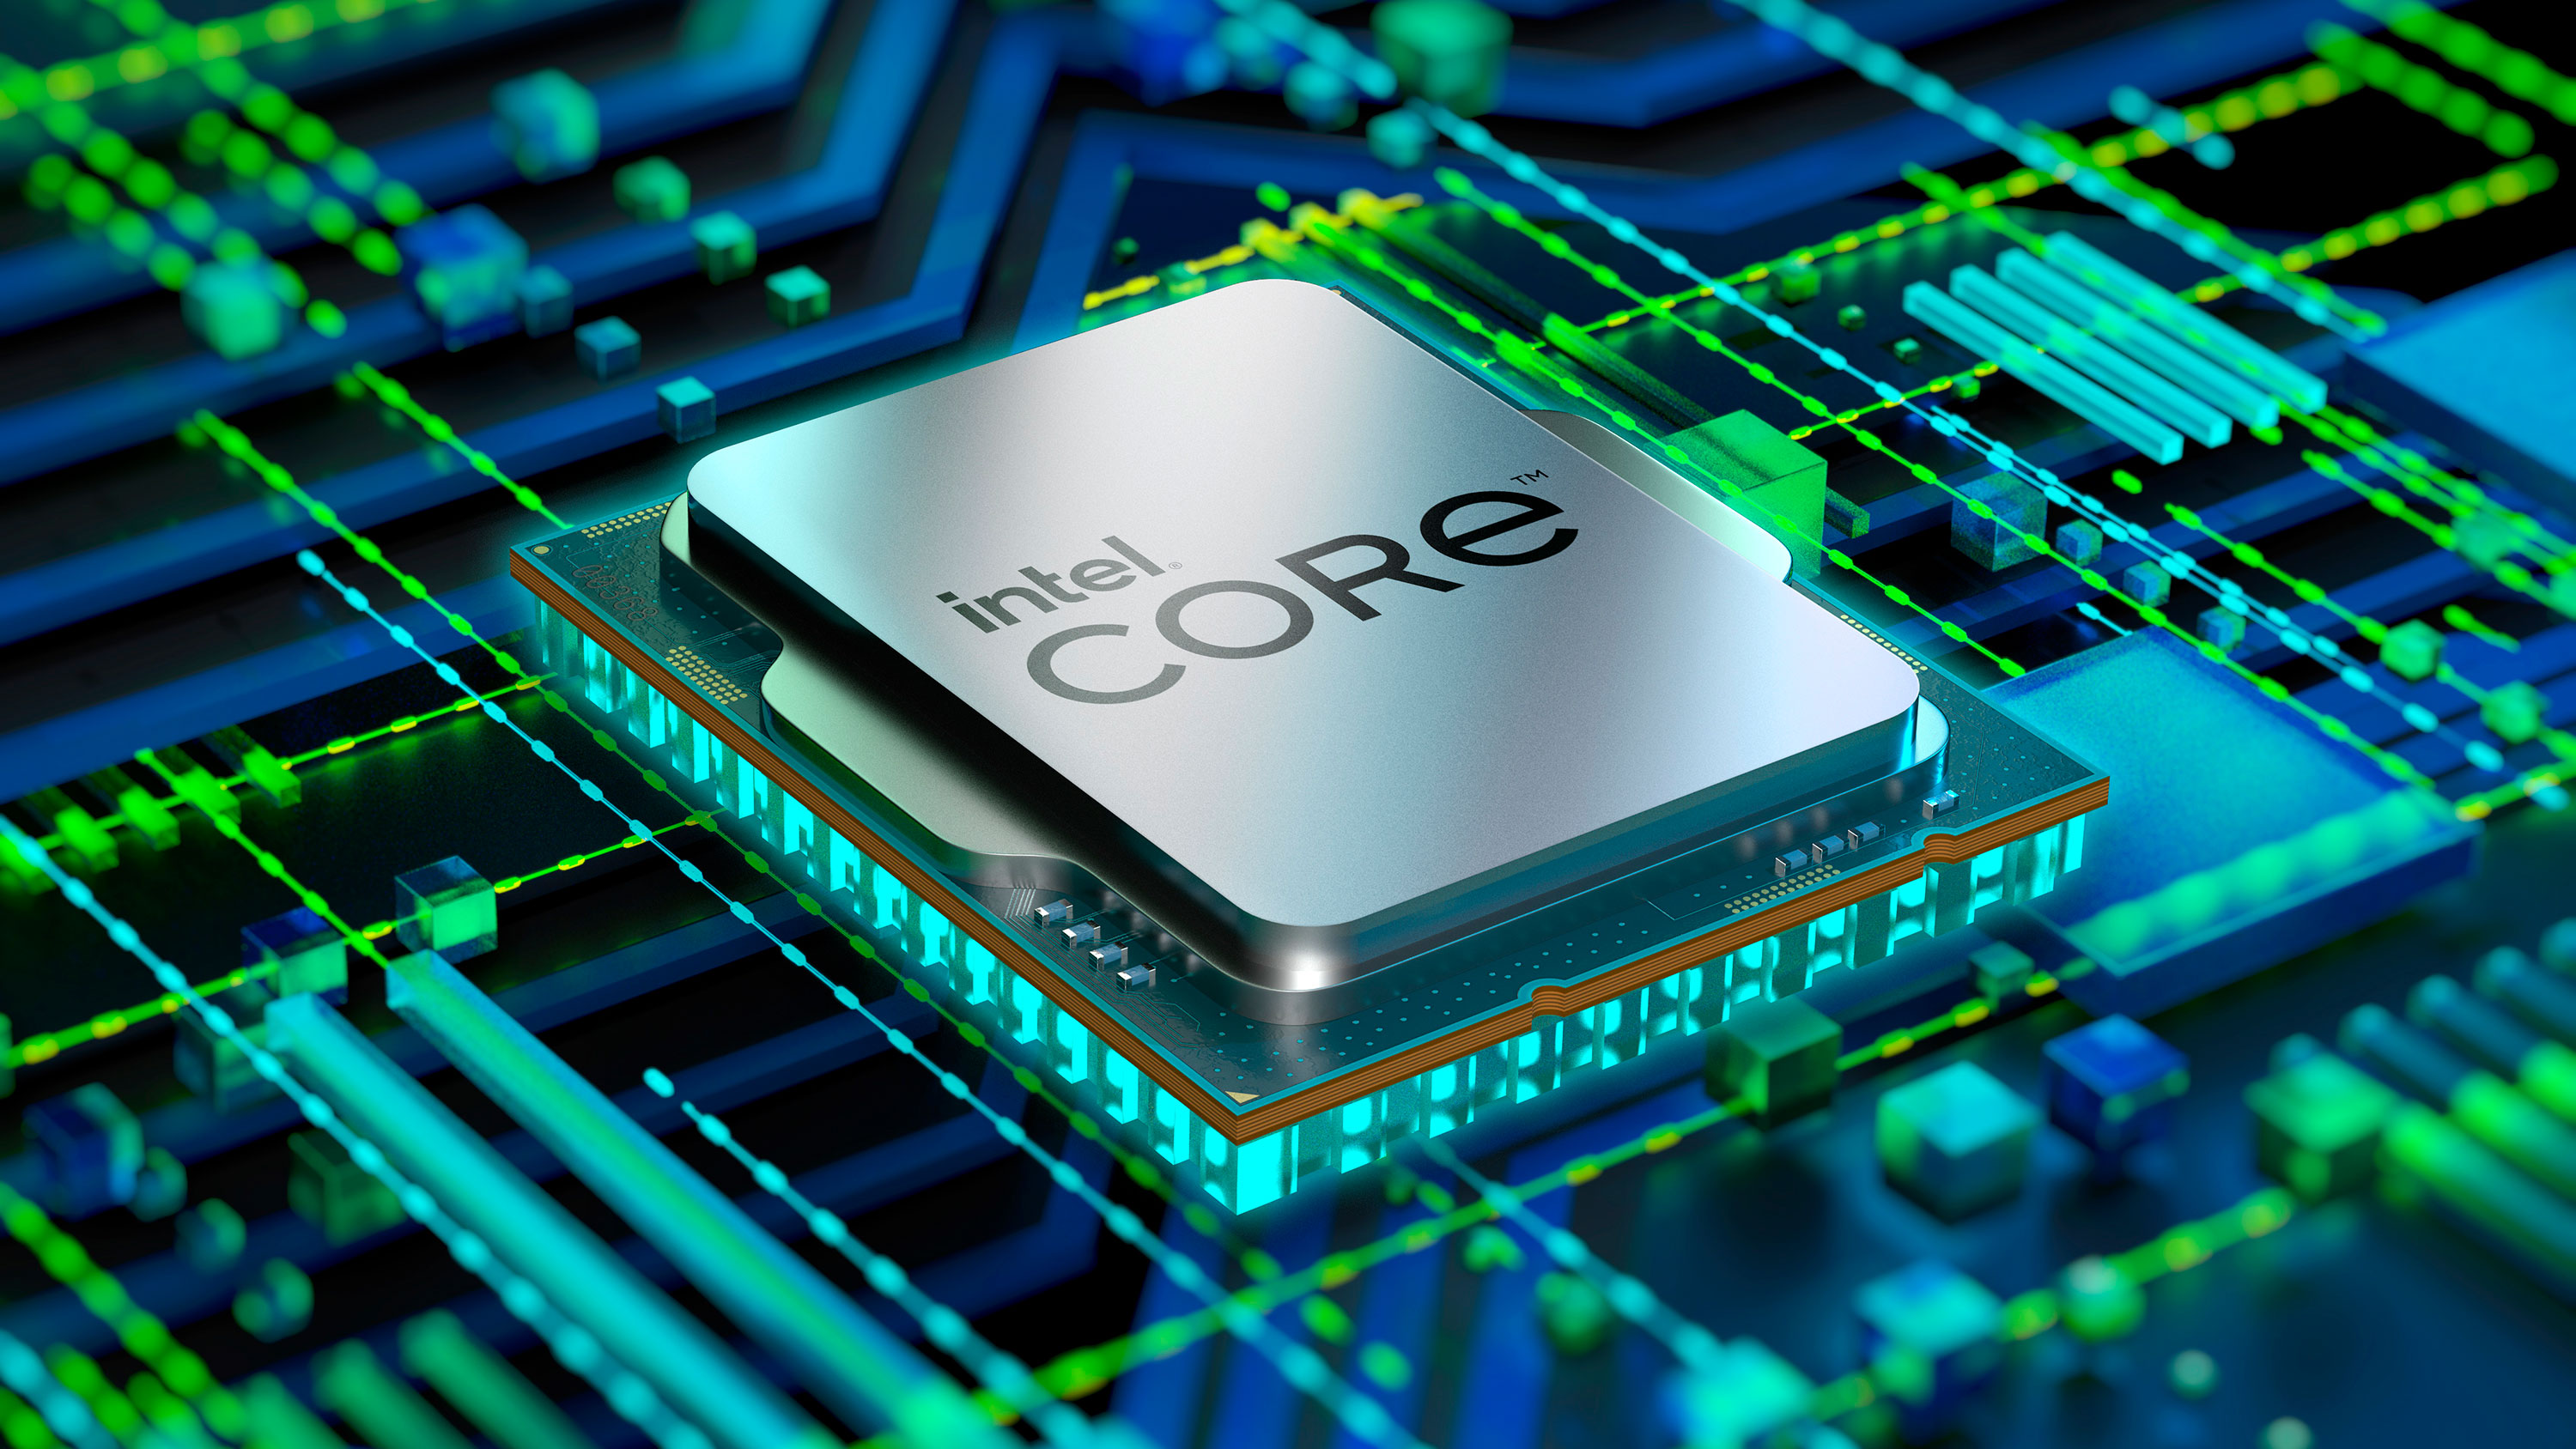 Procesor Intel Core i3-12100 je pecilne uren pre zkladn dosky s pticou LGA1700 z radu Intel 600 Series, kedy sa pia 4 jadrami s maximlnym taktom a 4,3 GHz vaka TB 2.0 technolgii.